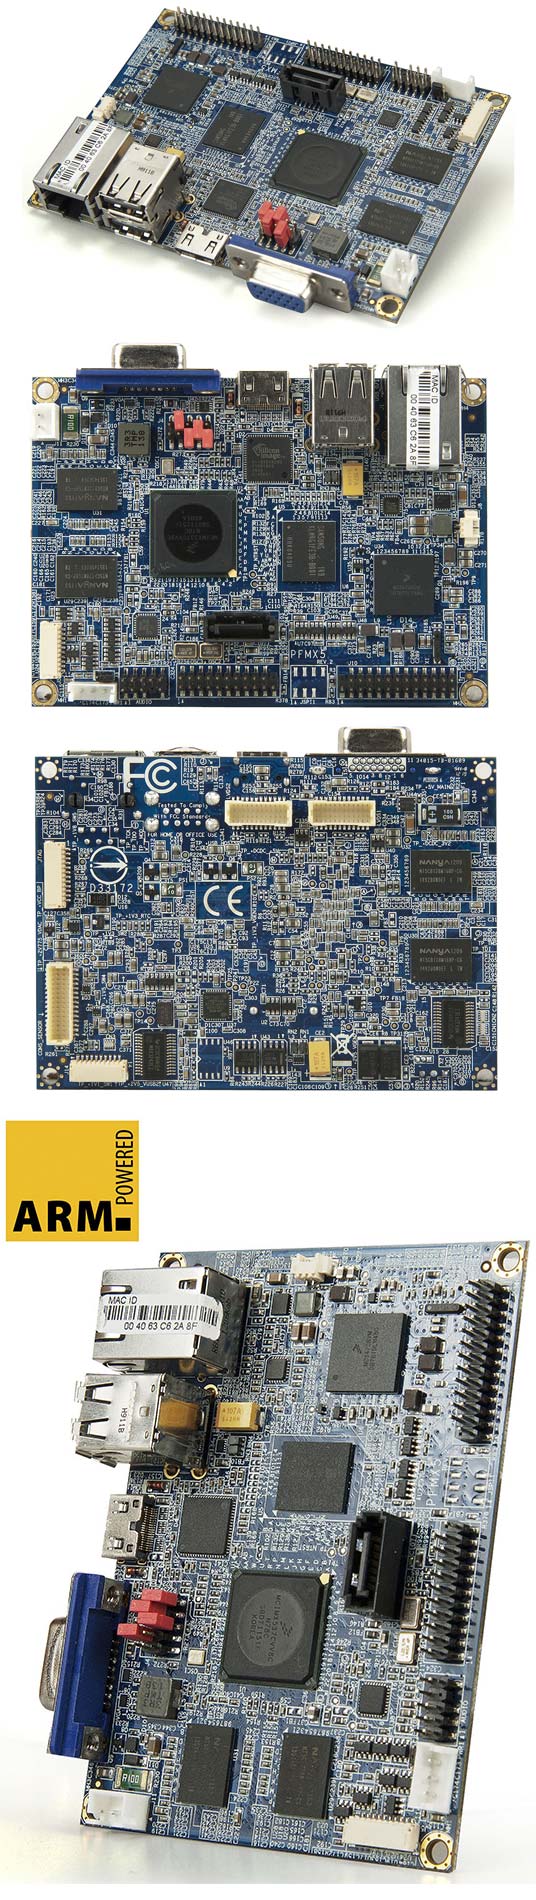 VIA VAB-P800 - Pico-ITX материнская плата с ARM процессором